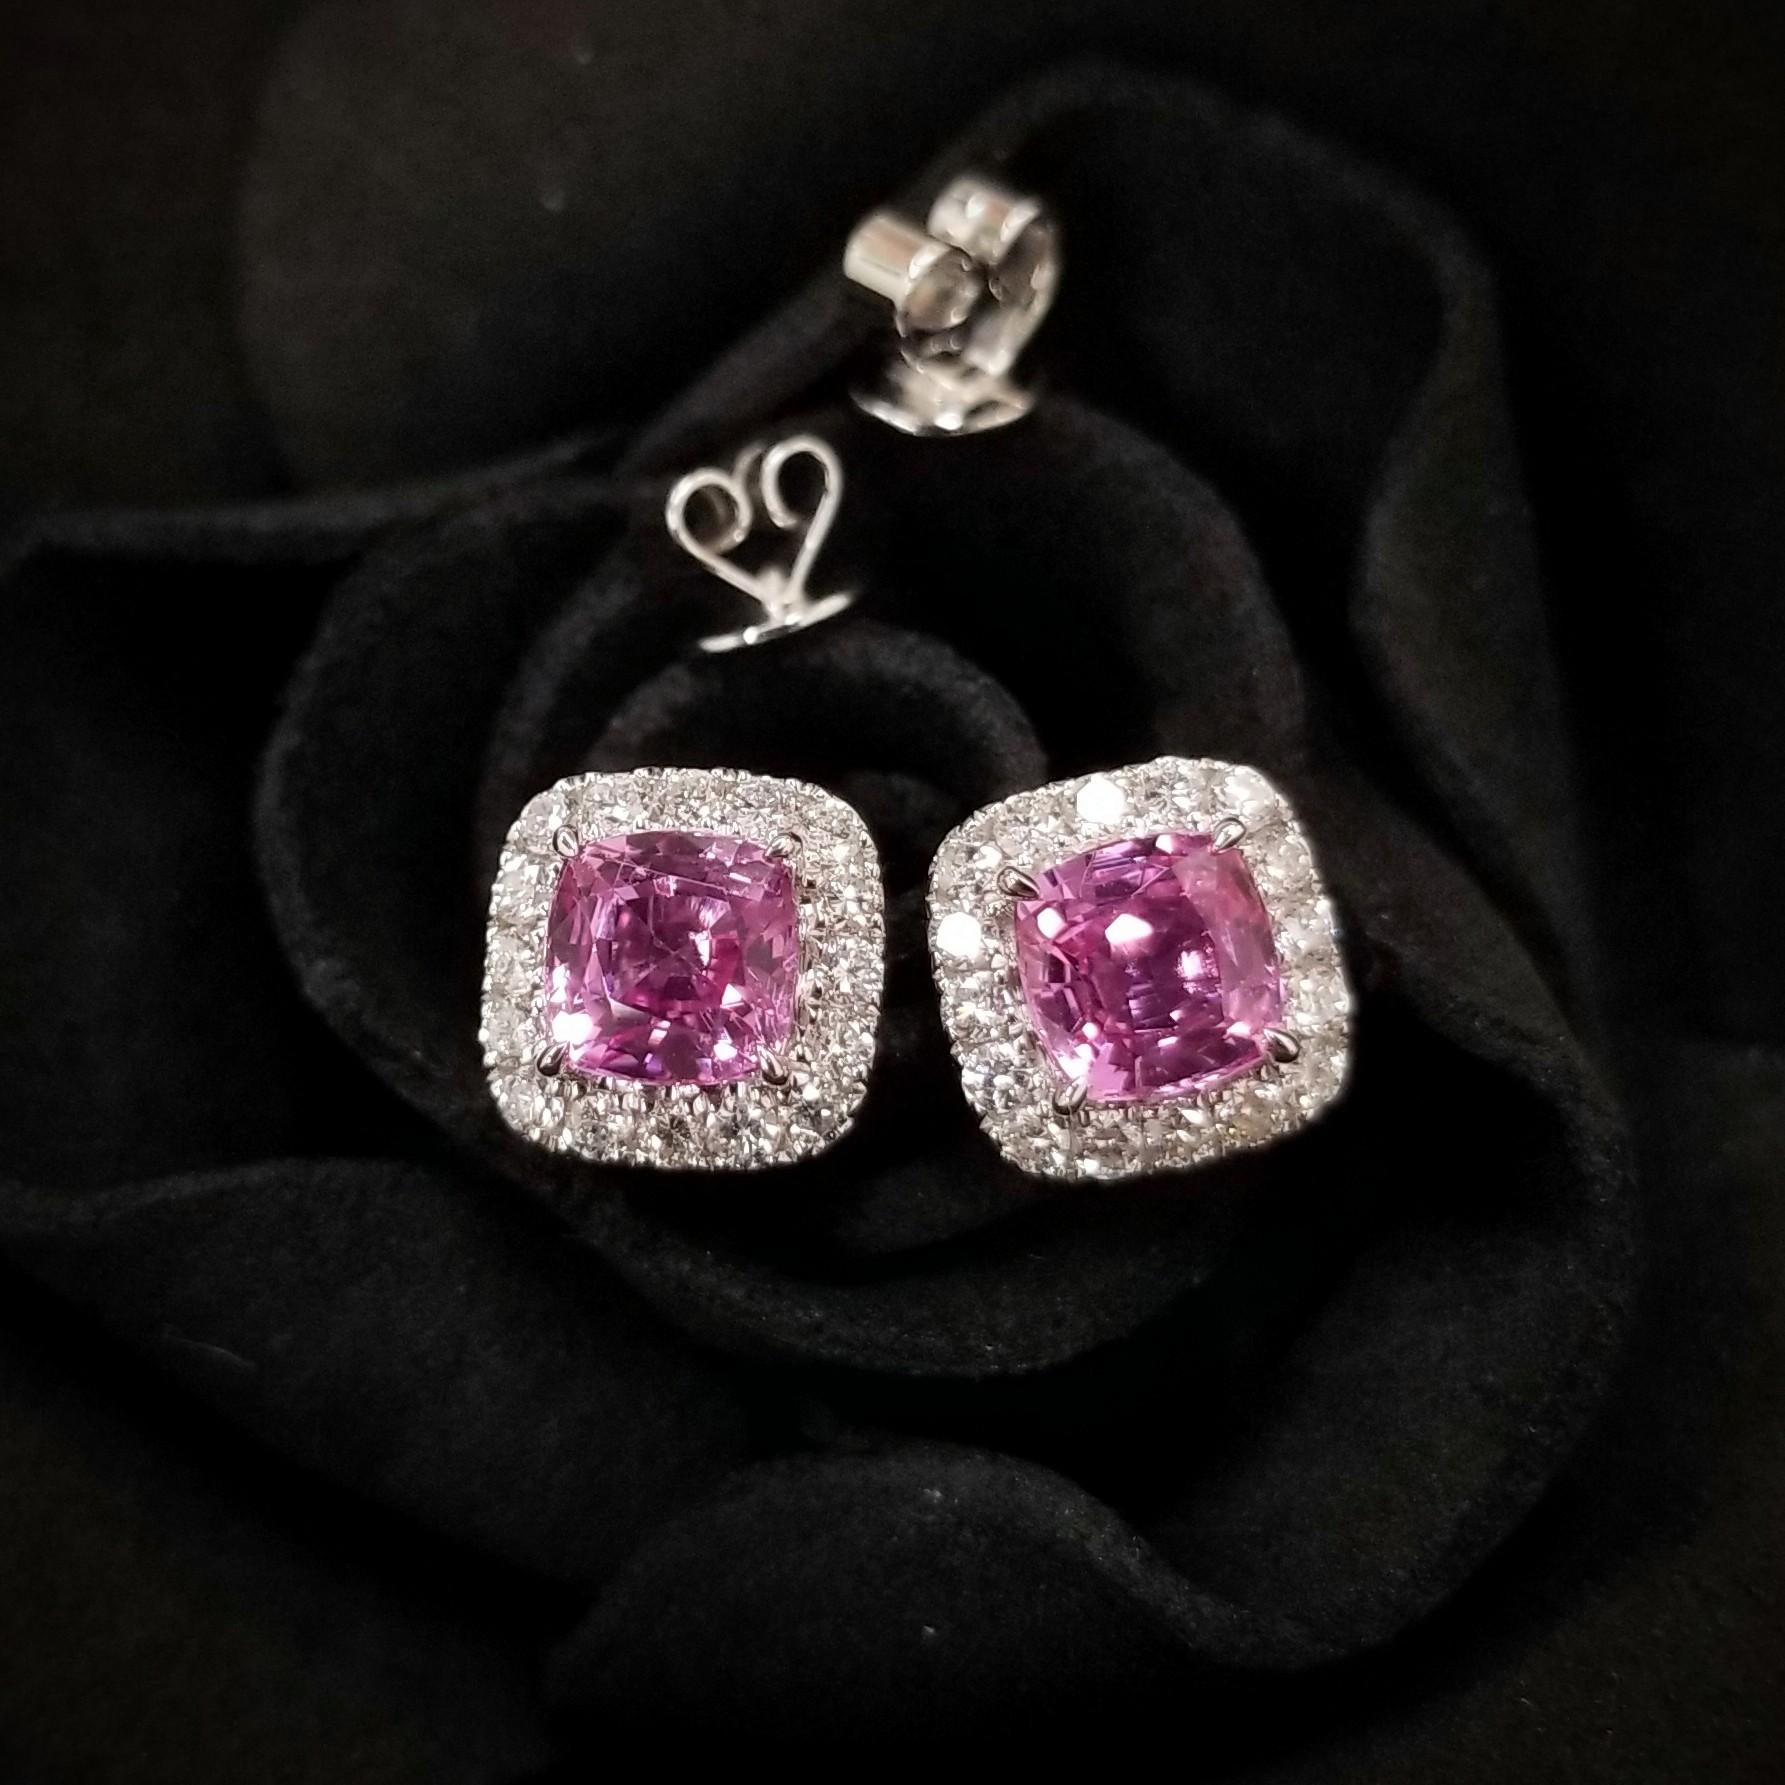 Cushion Cut IGI Certified 1.78 Carat Pink Sapphire & Diamond Earring in 18K White Gold For Sale